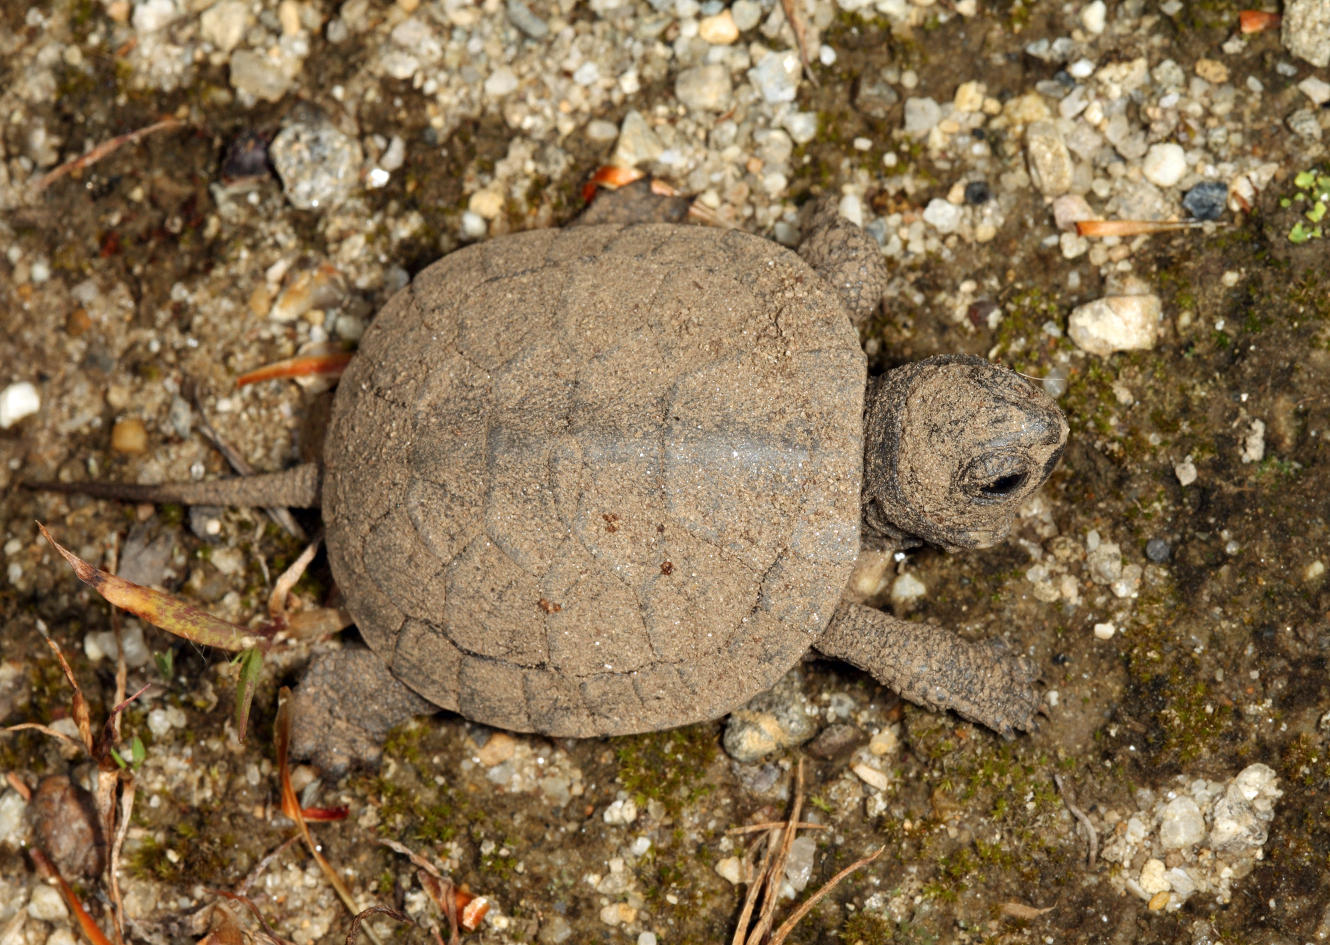 Blandings Turtle - Emydoidea blandingii (newly hatched)